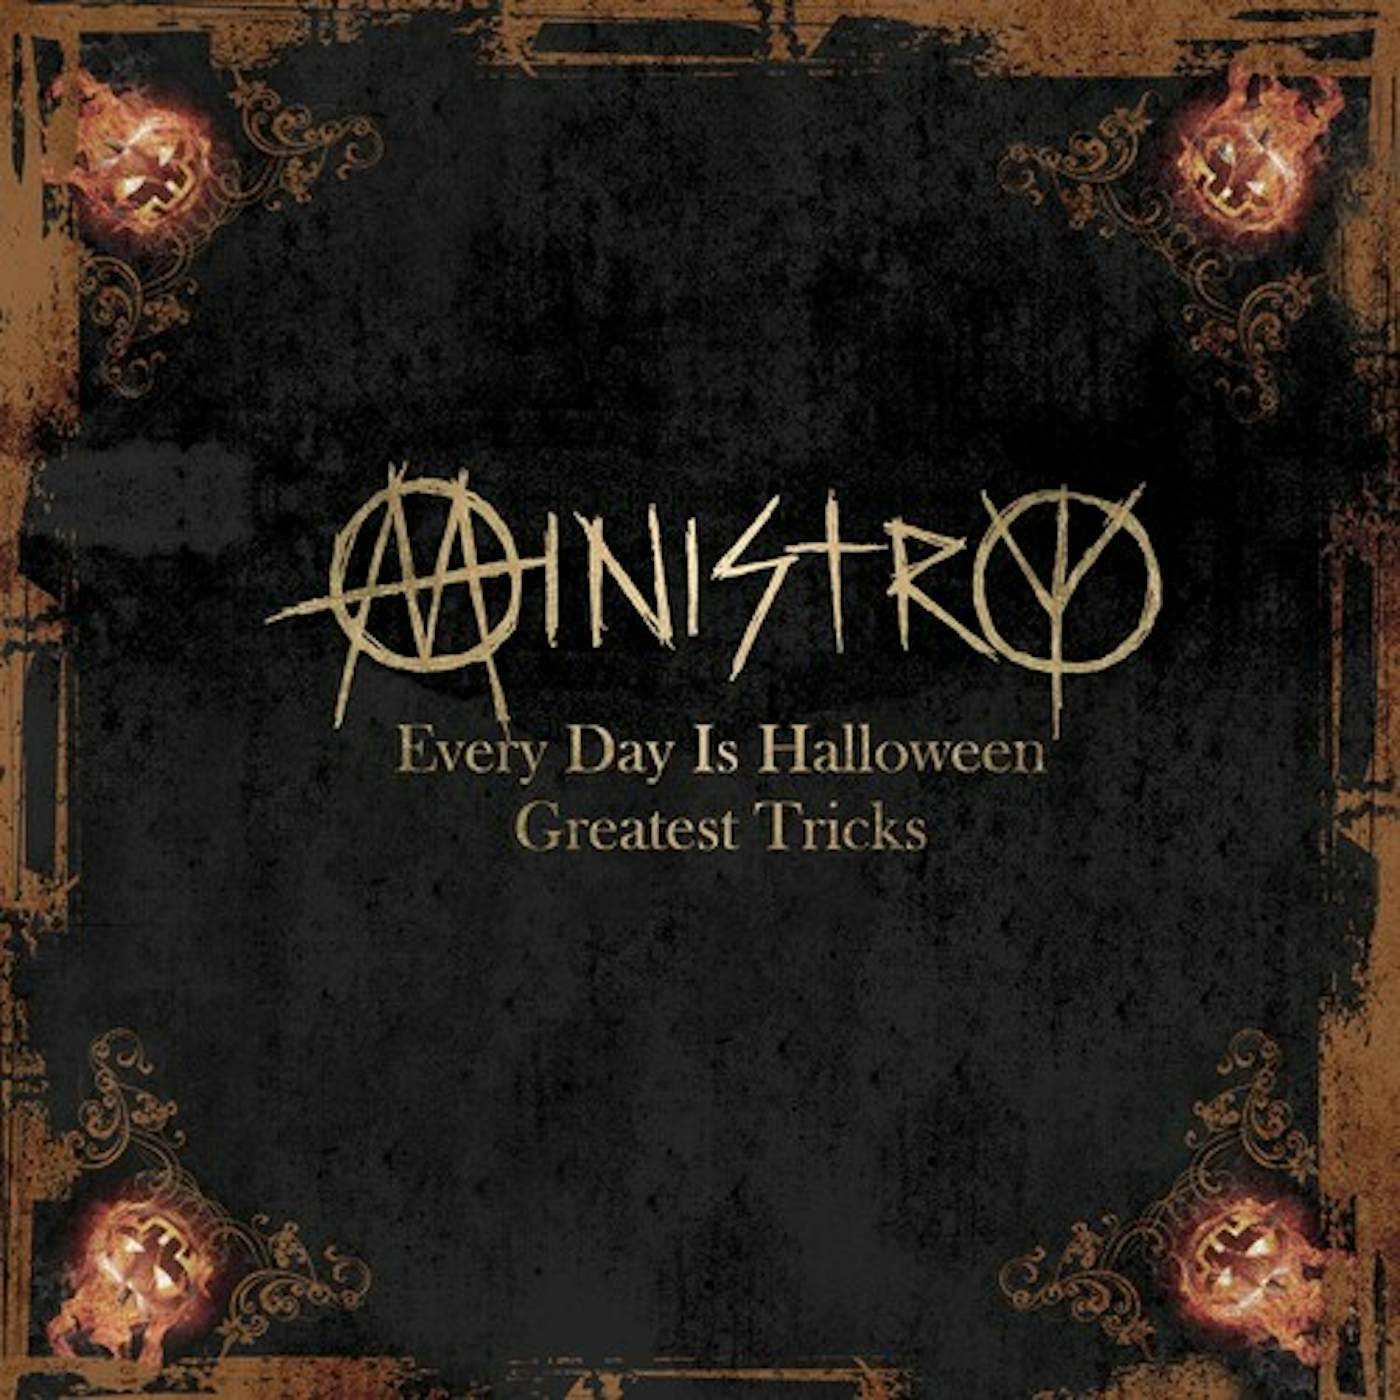 Ministry Every Day Is Halloween - Greatest Tricks - Orange Vinyl Record